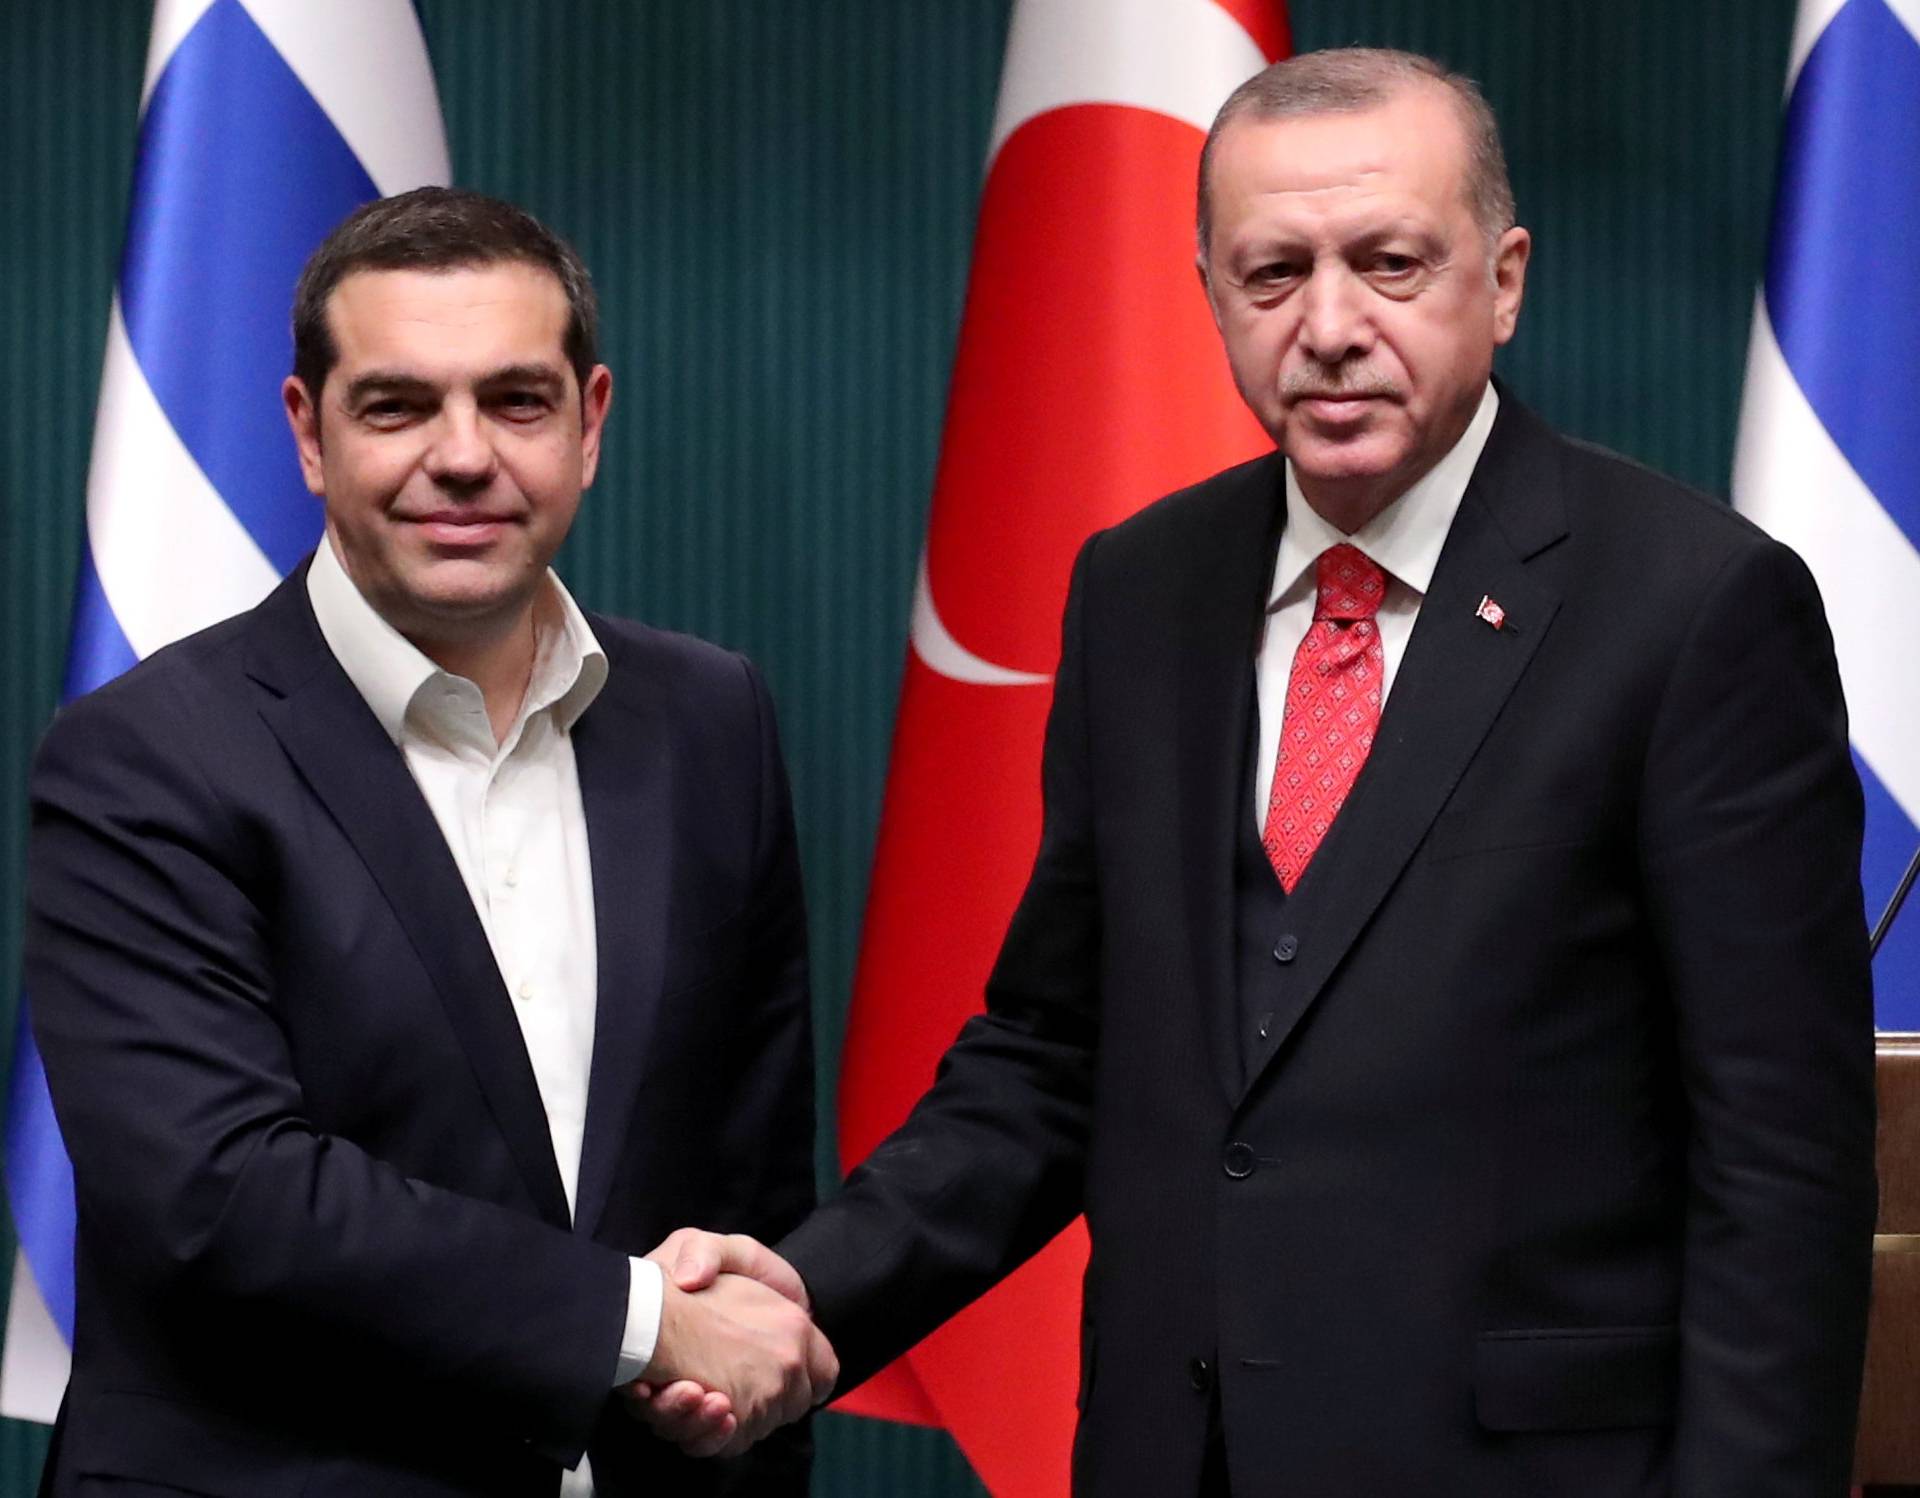 Turkish President Erdogan meets Greek Prime Minister Tsipras in Ankara